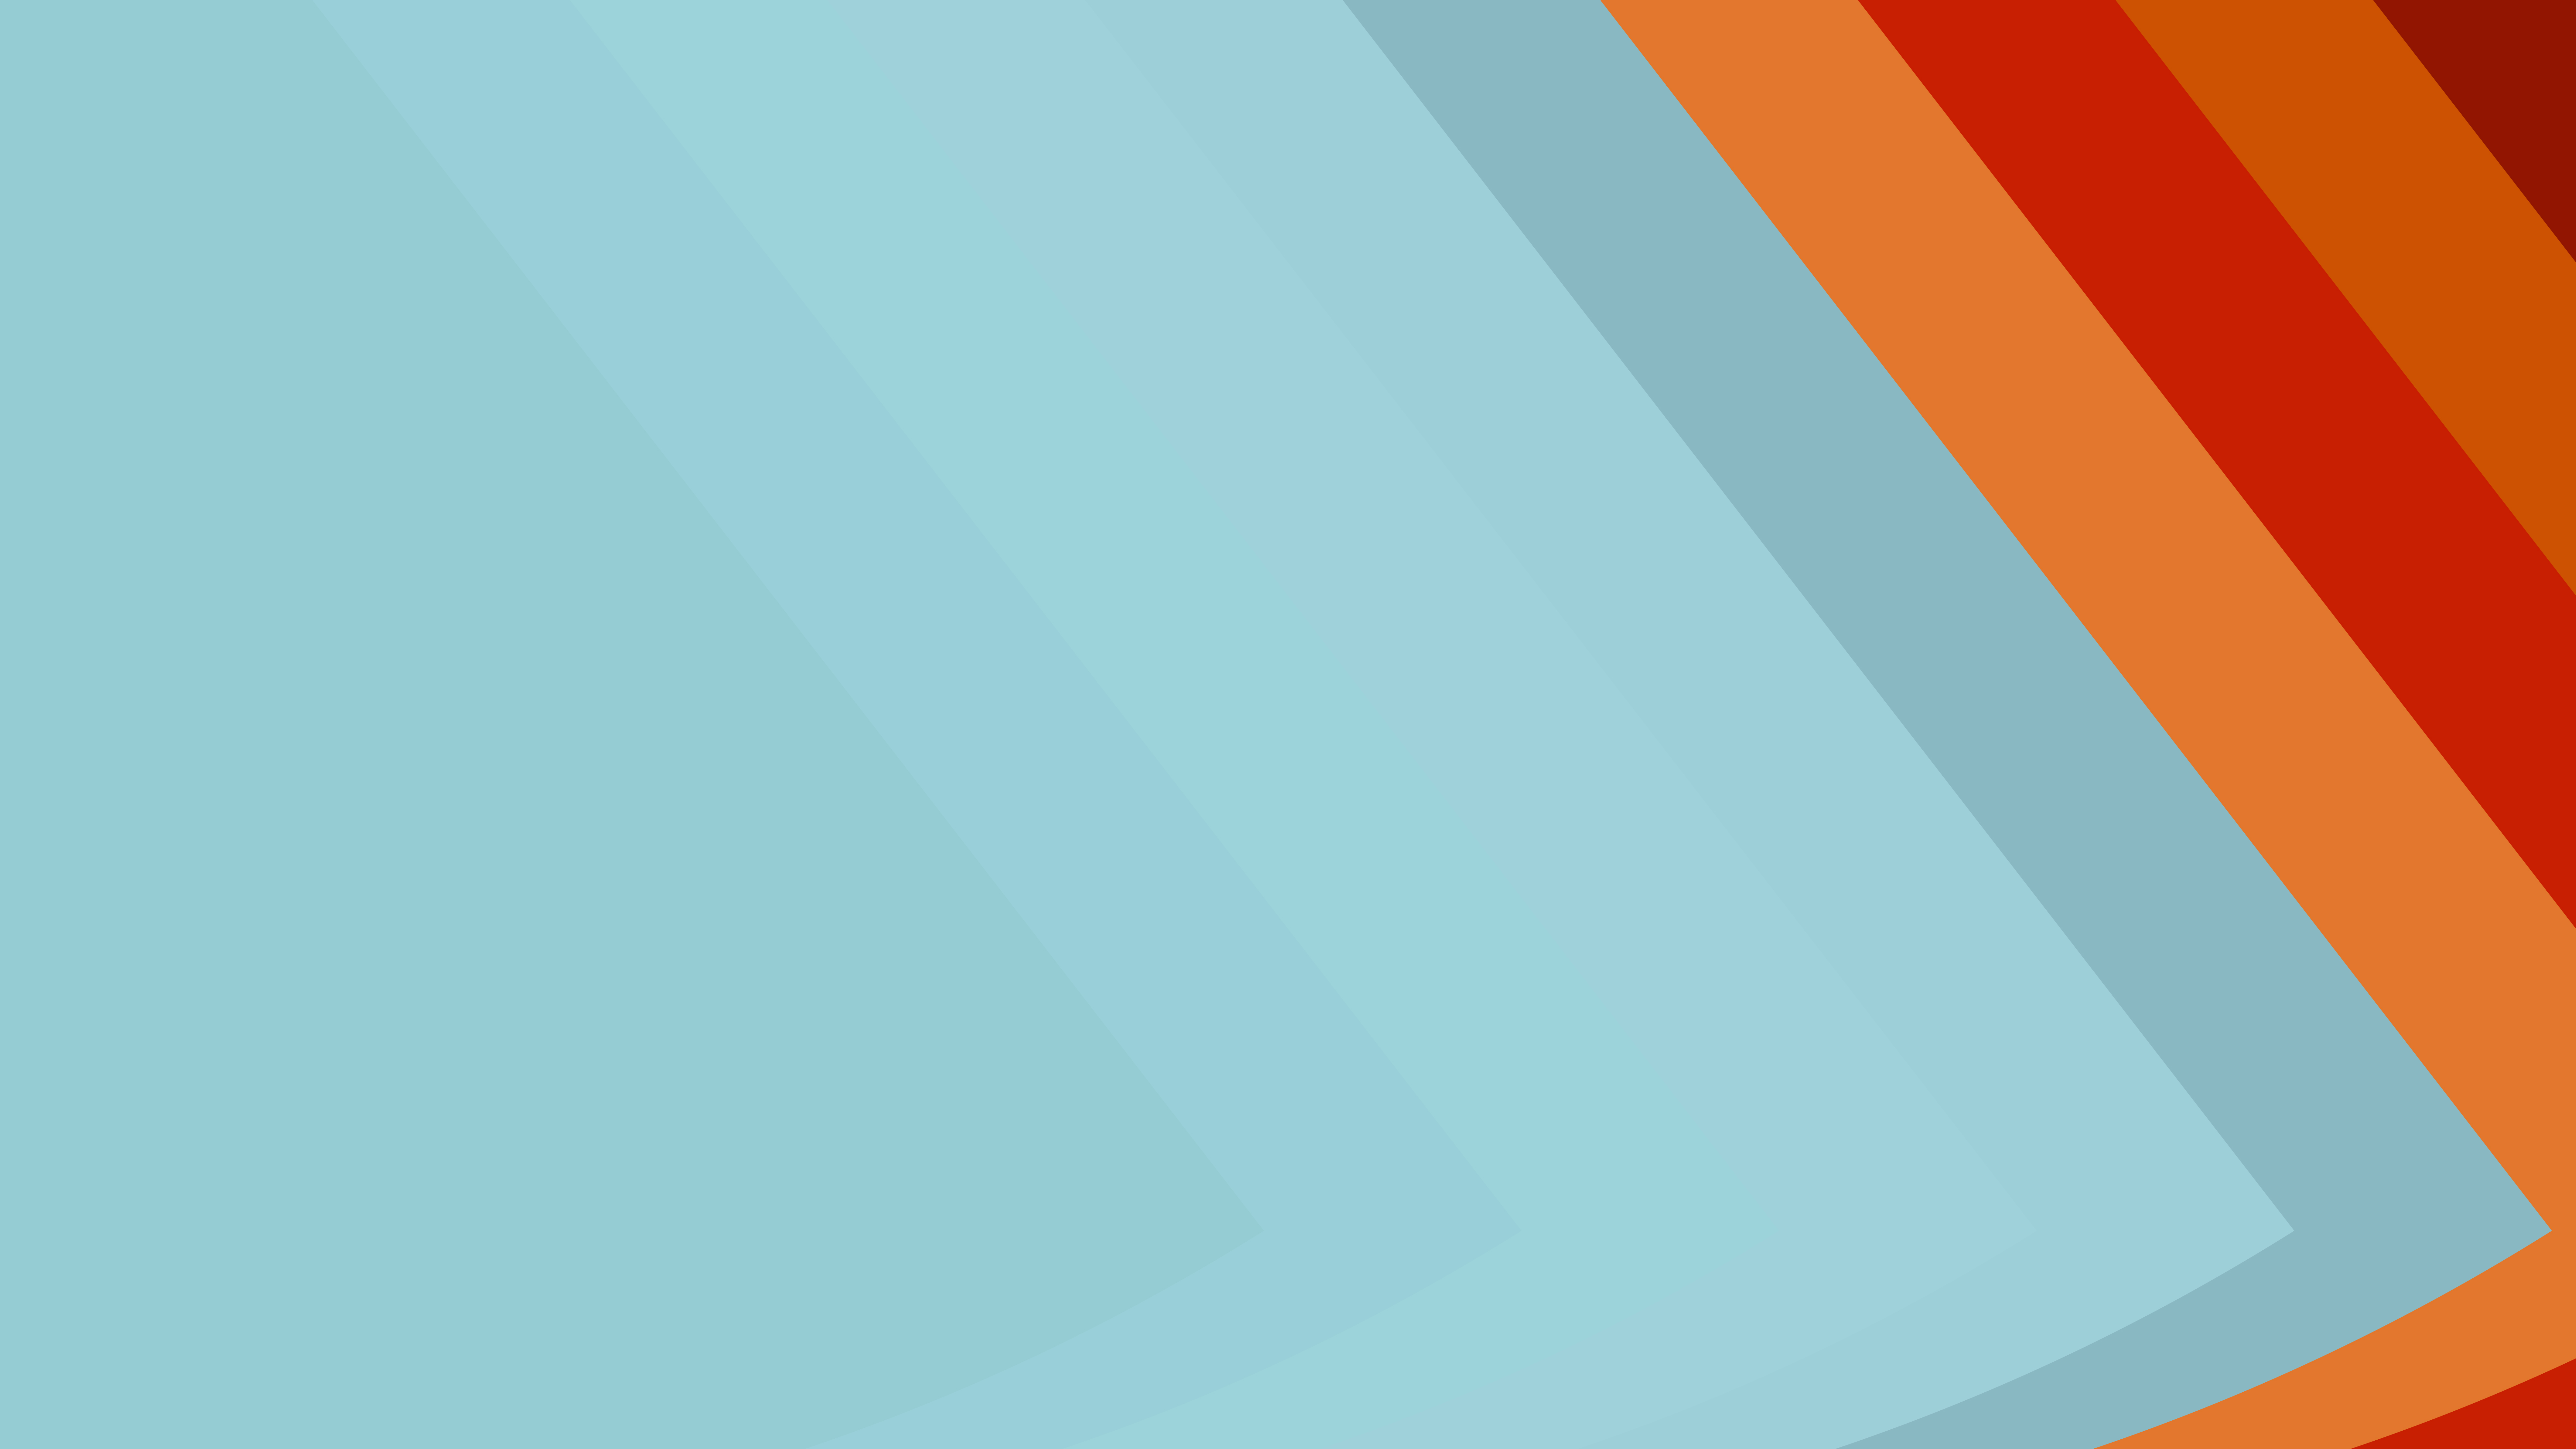 Free Blue and Orange Geometric Shapes Background Vector